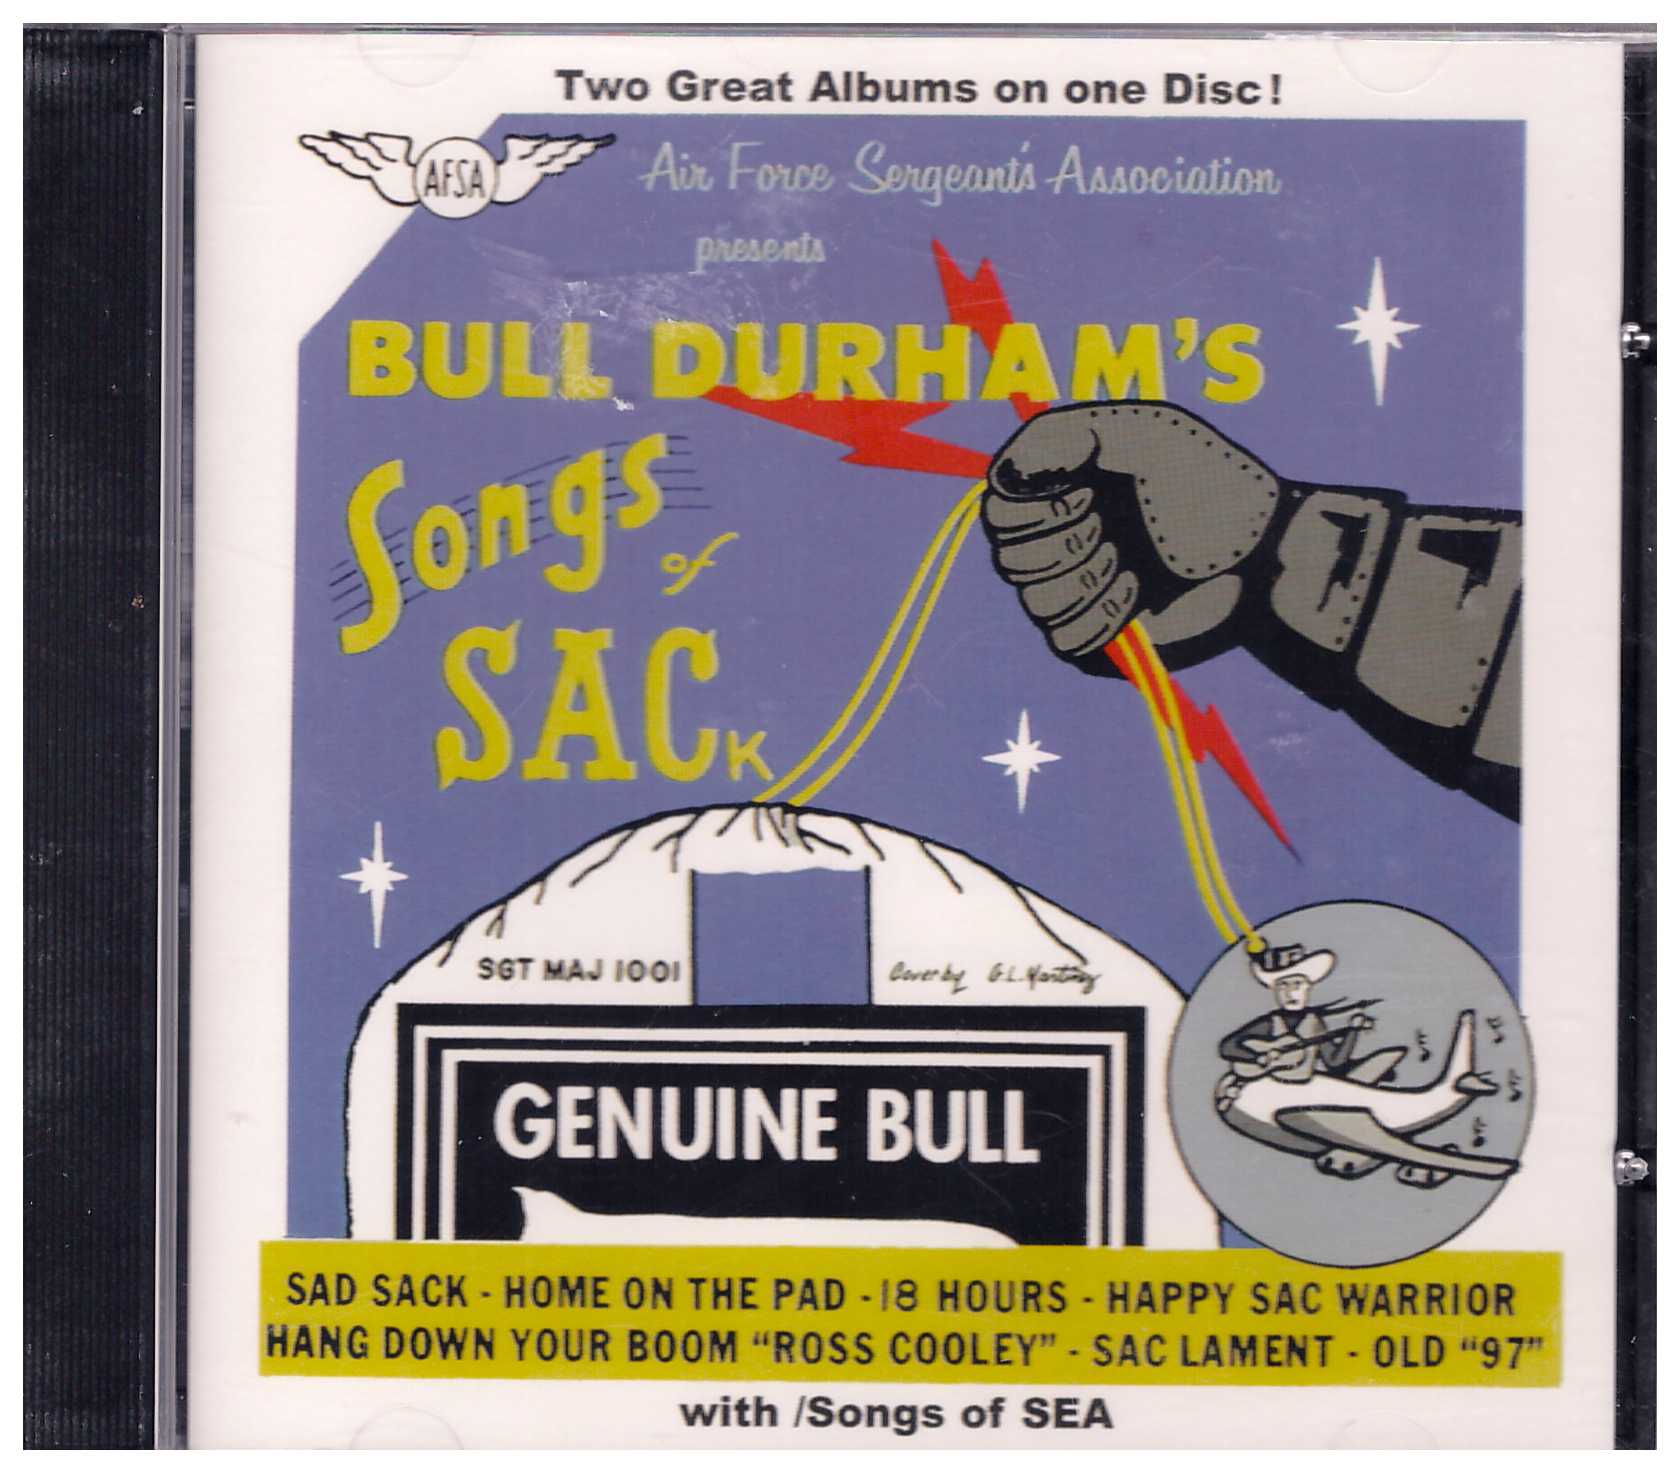 BULL DURHAM's SONGS of SAC